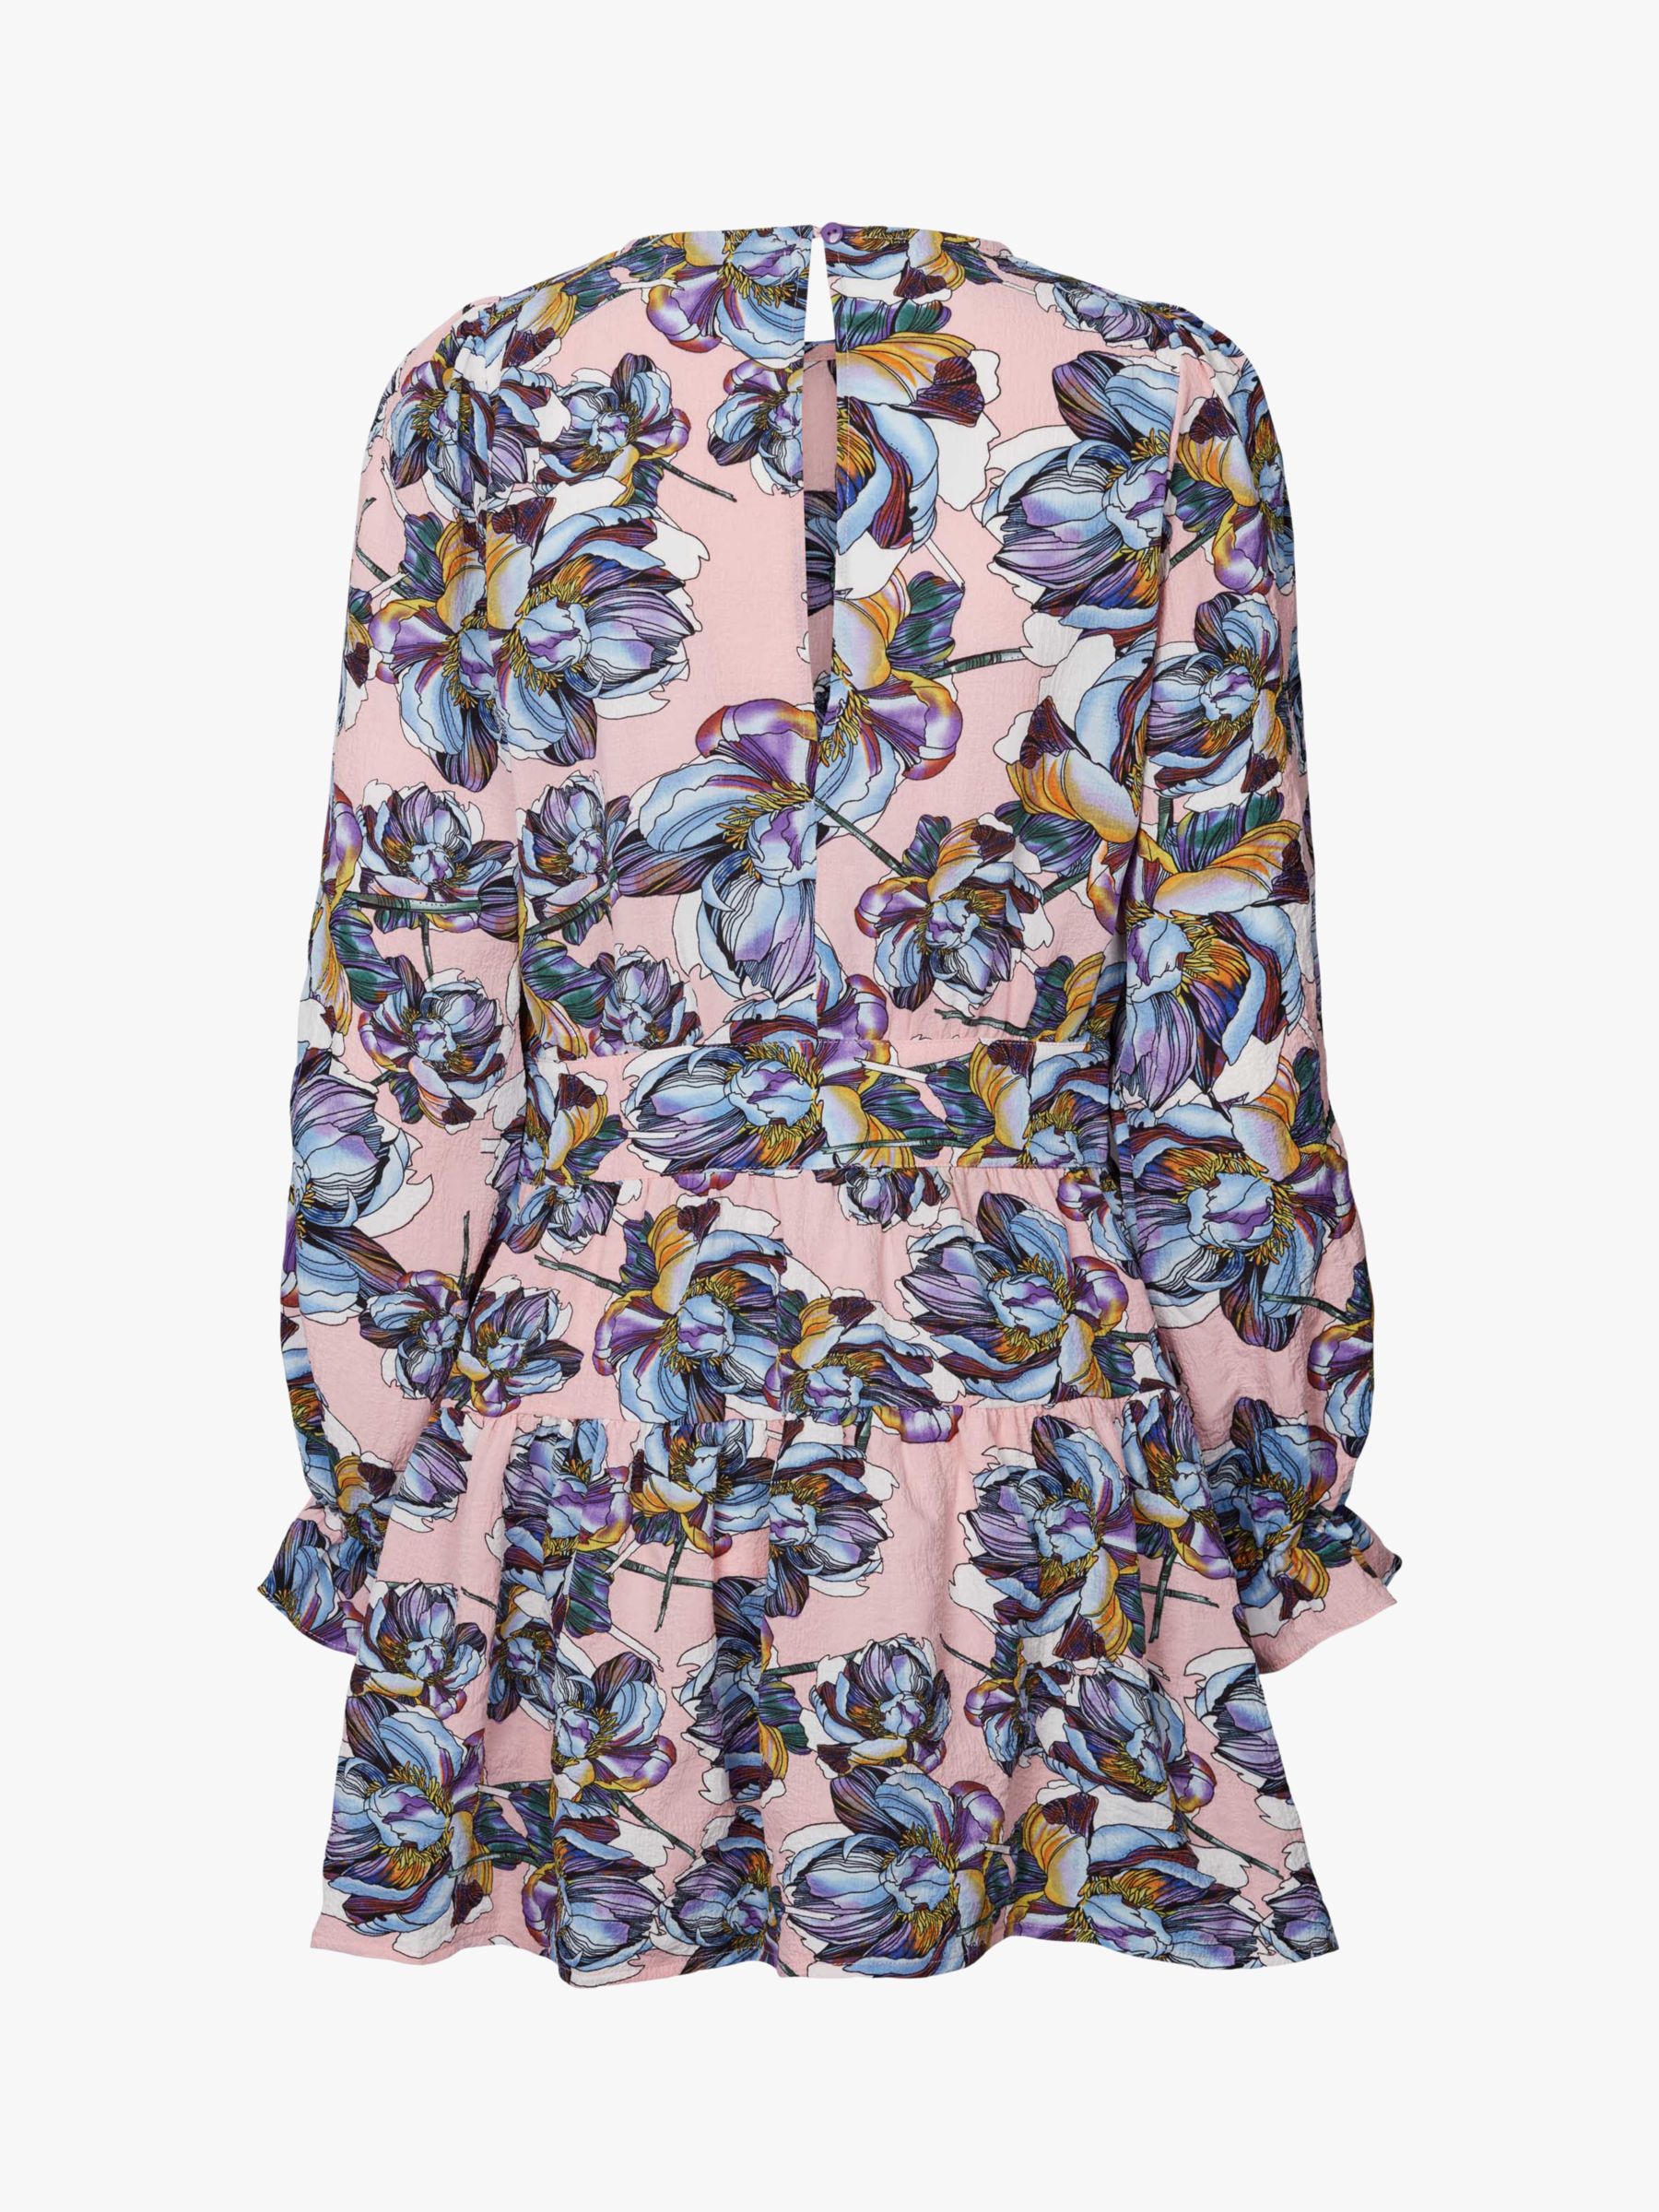 Lollys Laundry Parina Floral Print Mini Dress, Lilac/Multi, L